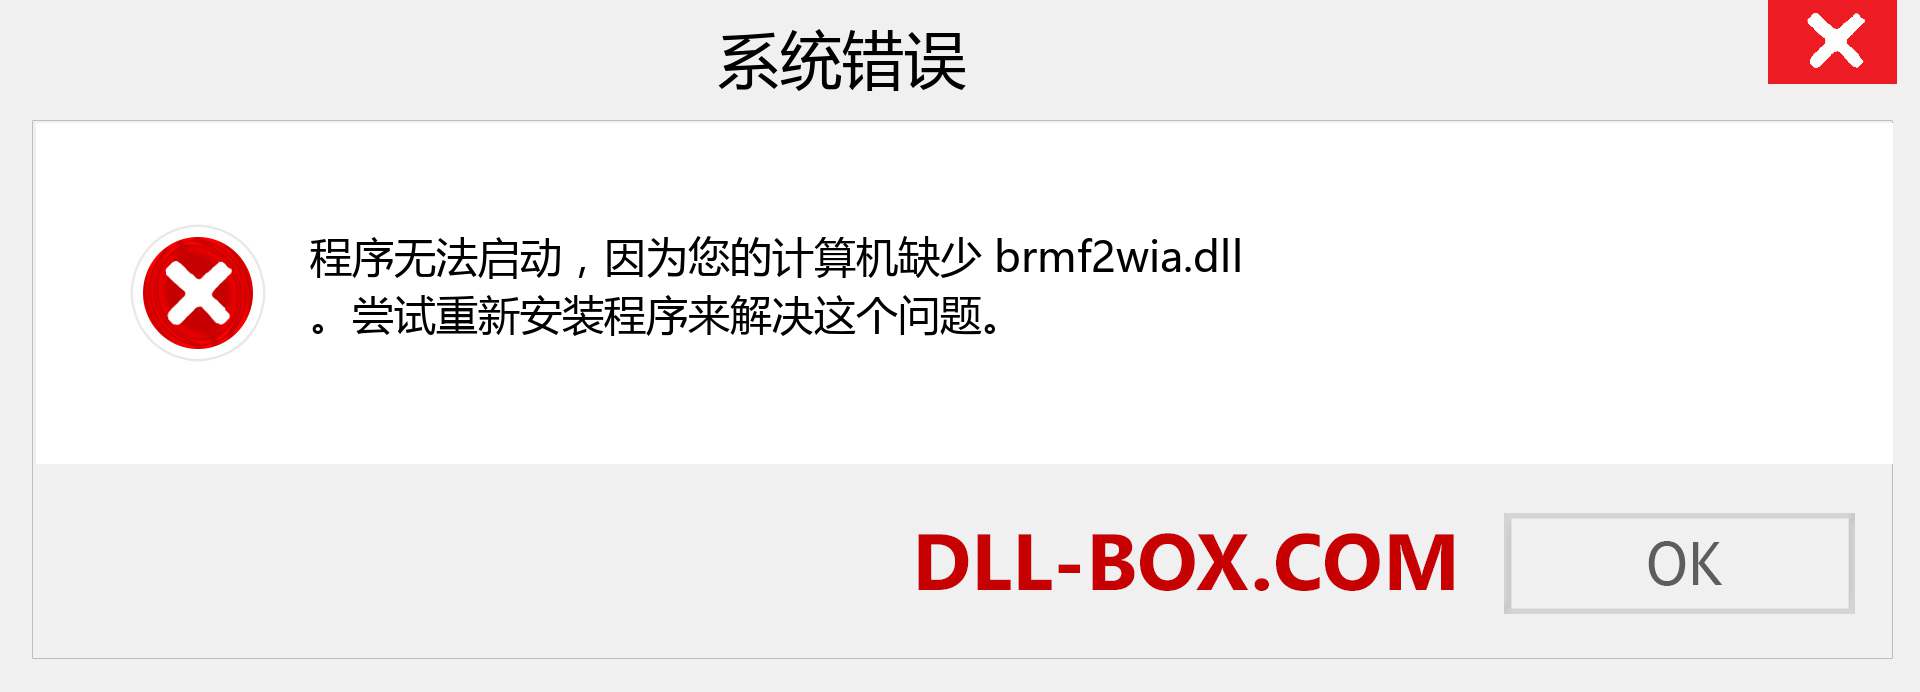 brmf2wia.dll 文件丢失？。 适用于 Windows 7、8、10 的下载 - 修复 Windows、照片、图像上的 brmf2wia dll 丢失错误